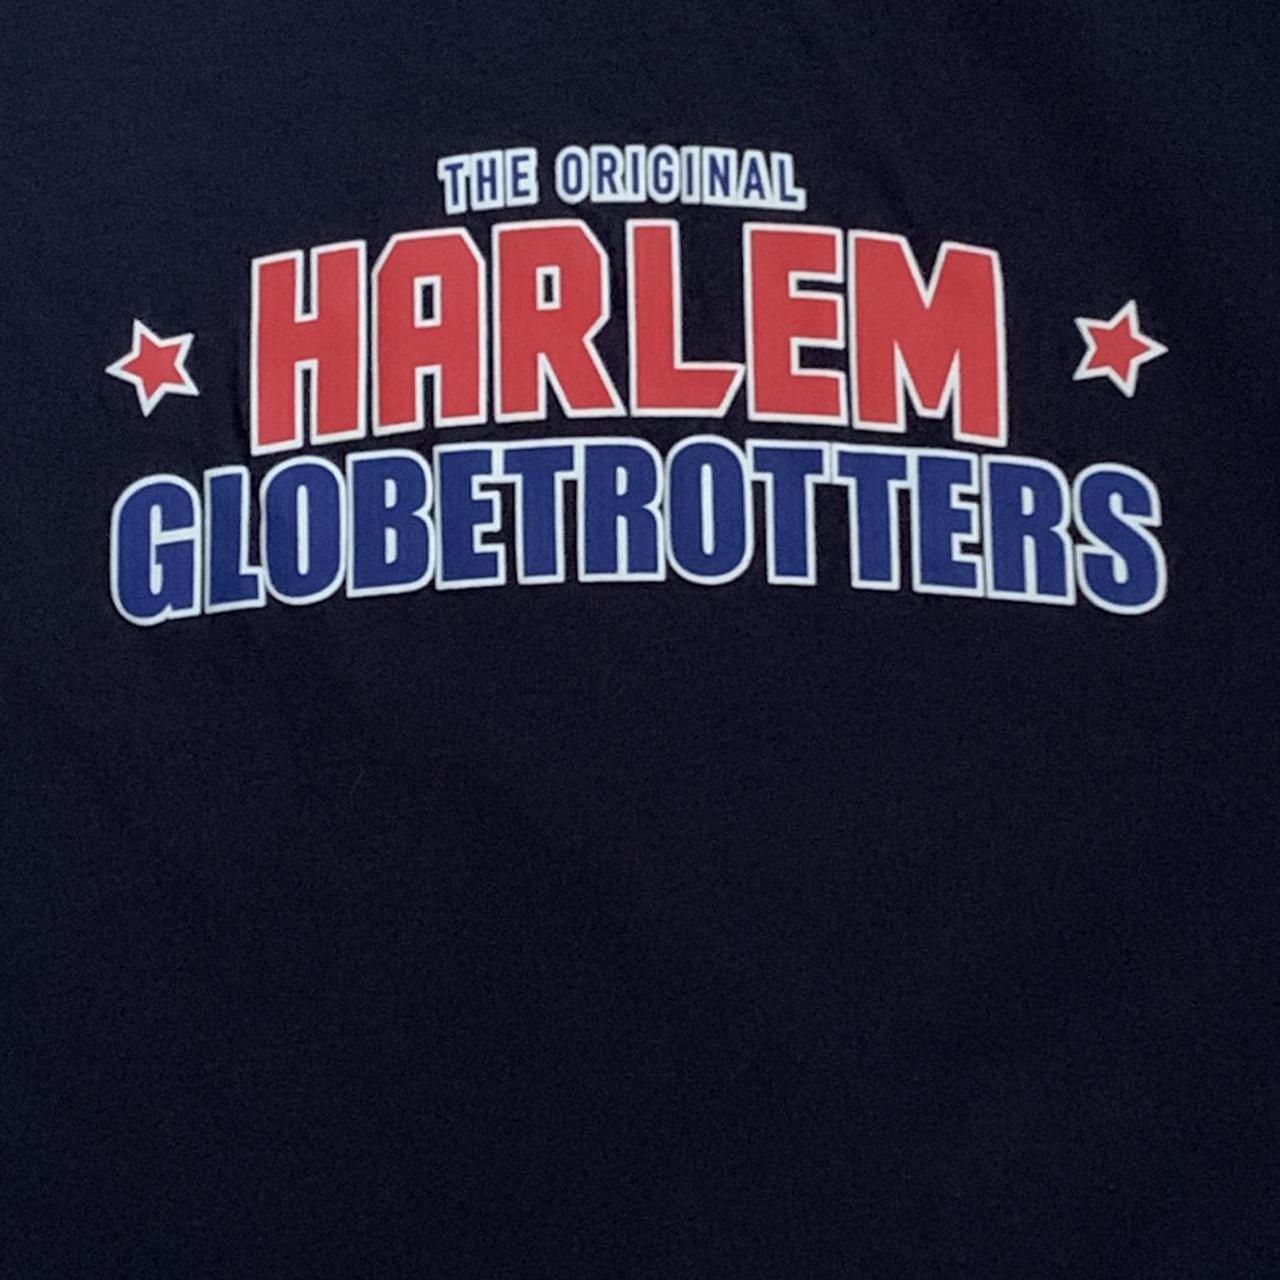 Product Image 2 - The original Harlem Globetrotters Champion